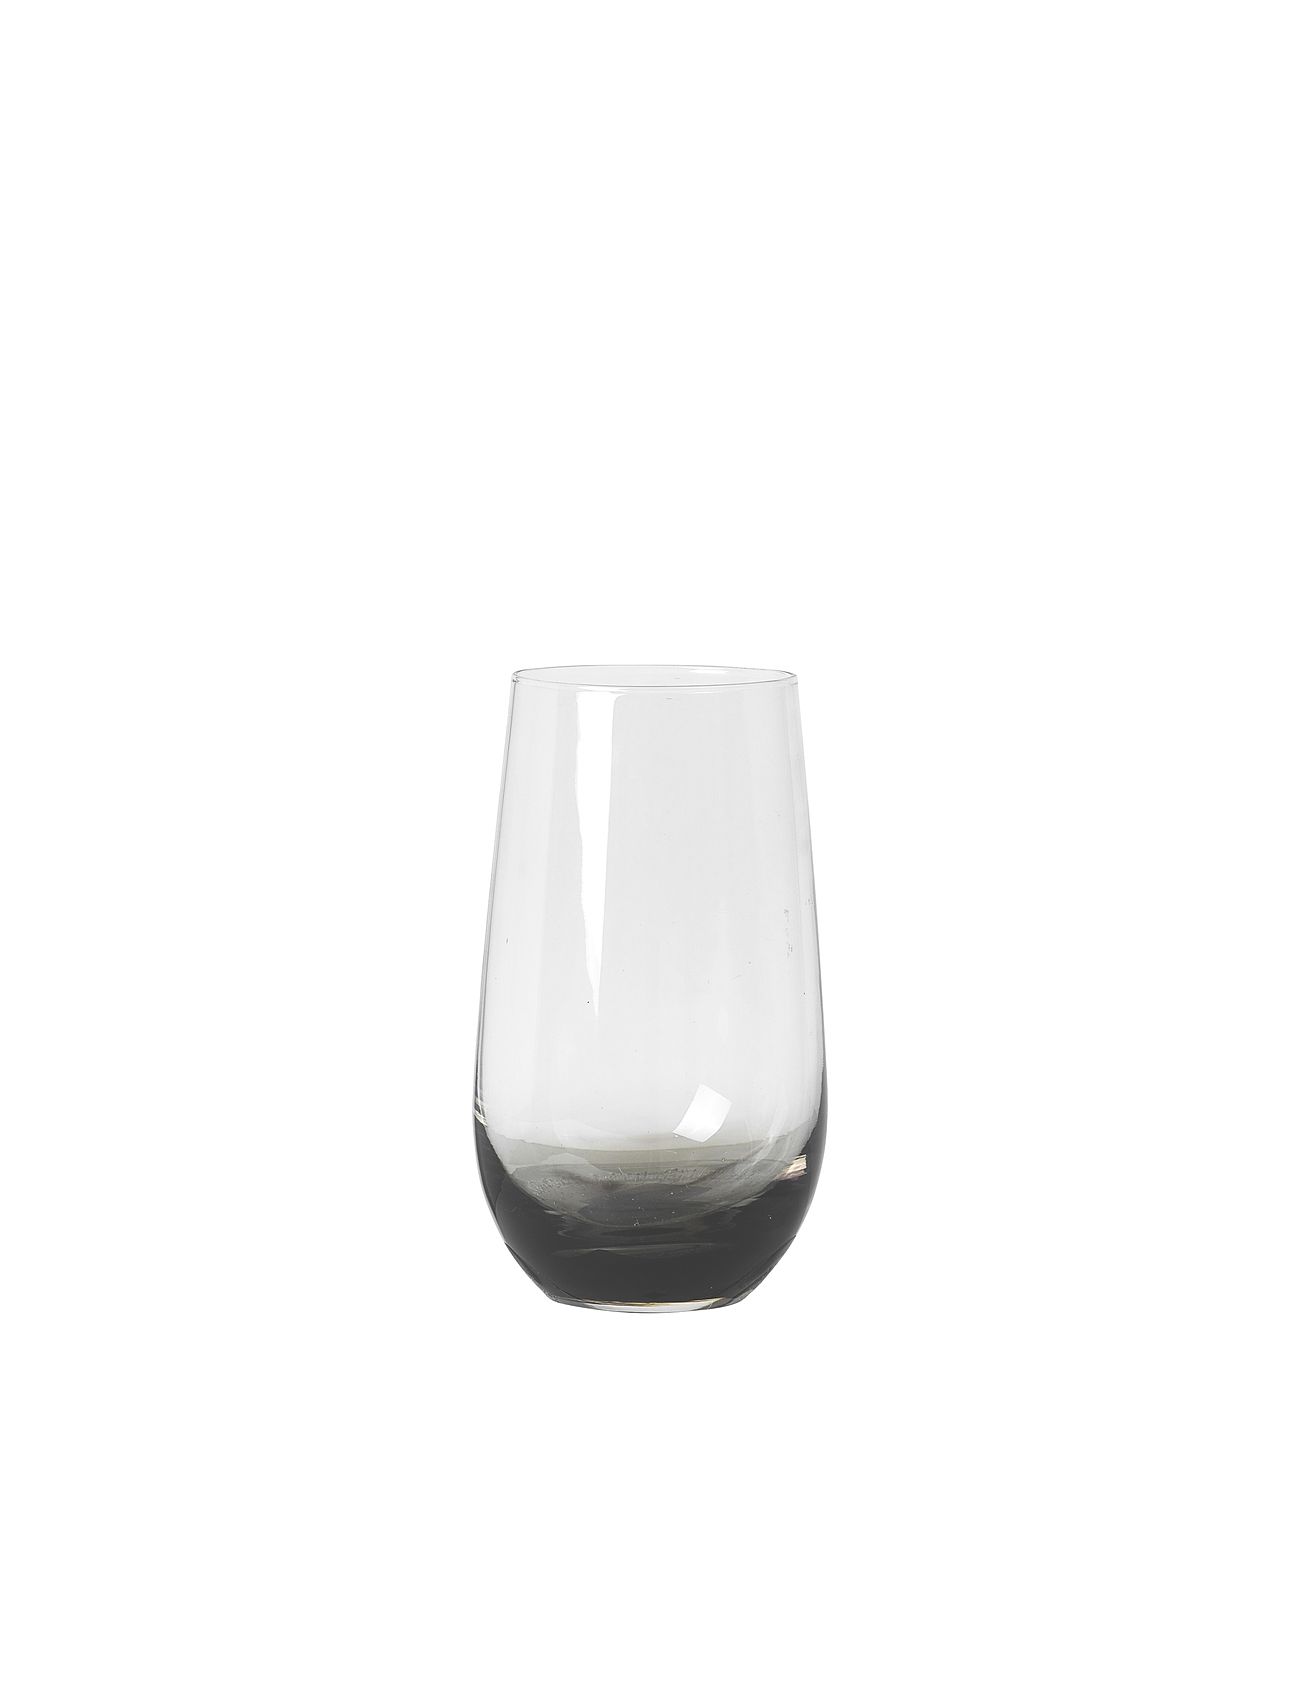 Drikkeglas 'Smoke' Glas Home Tableware Glass Drinking Glass Grey Broste Copenhagen